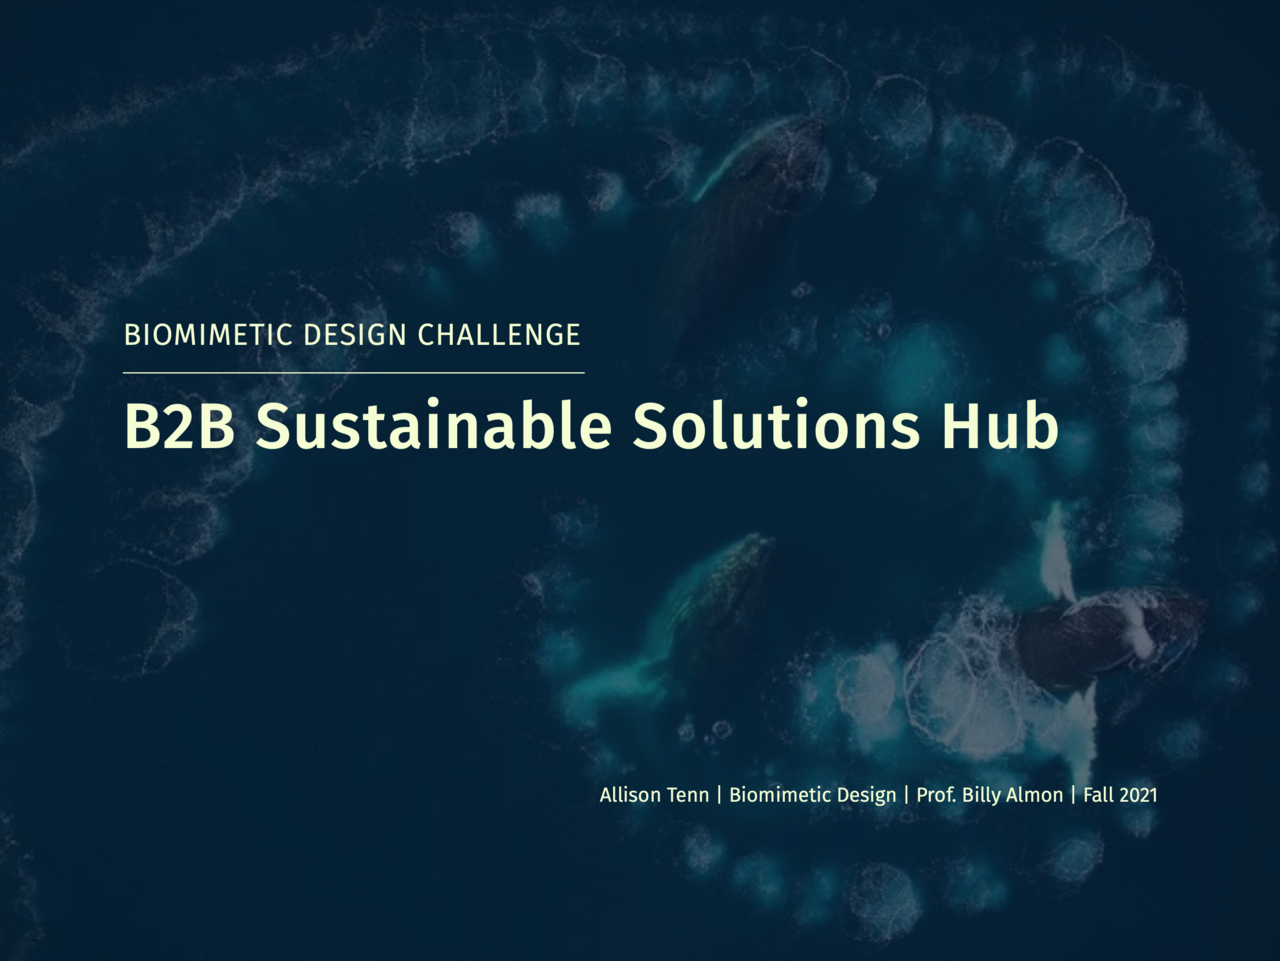 B2B Sustainable Solutions Hub presentation by Allison Tenn